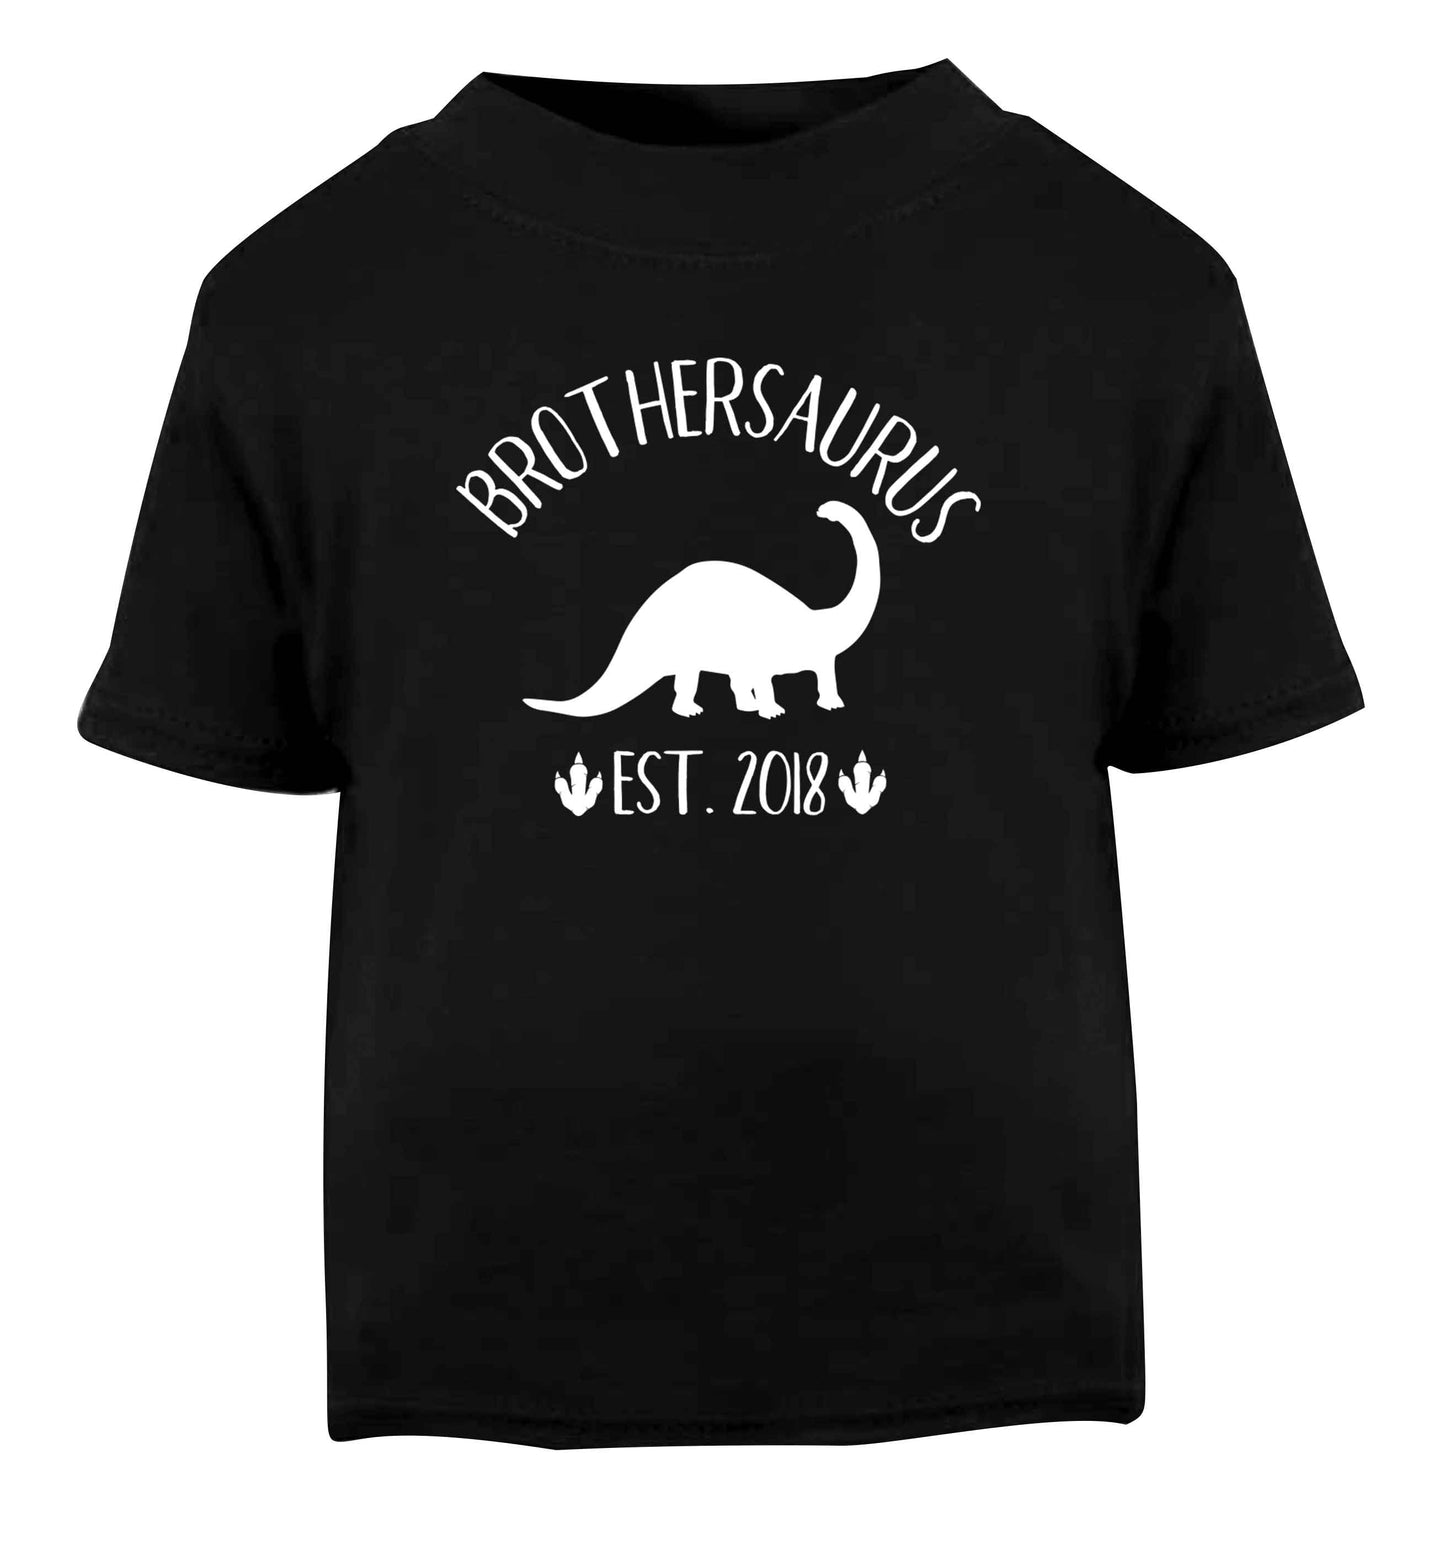 Personalised brothersaurus since (custom date) Black Baby Toddler Tshirt 2 years